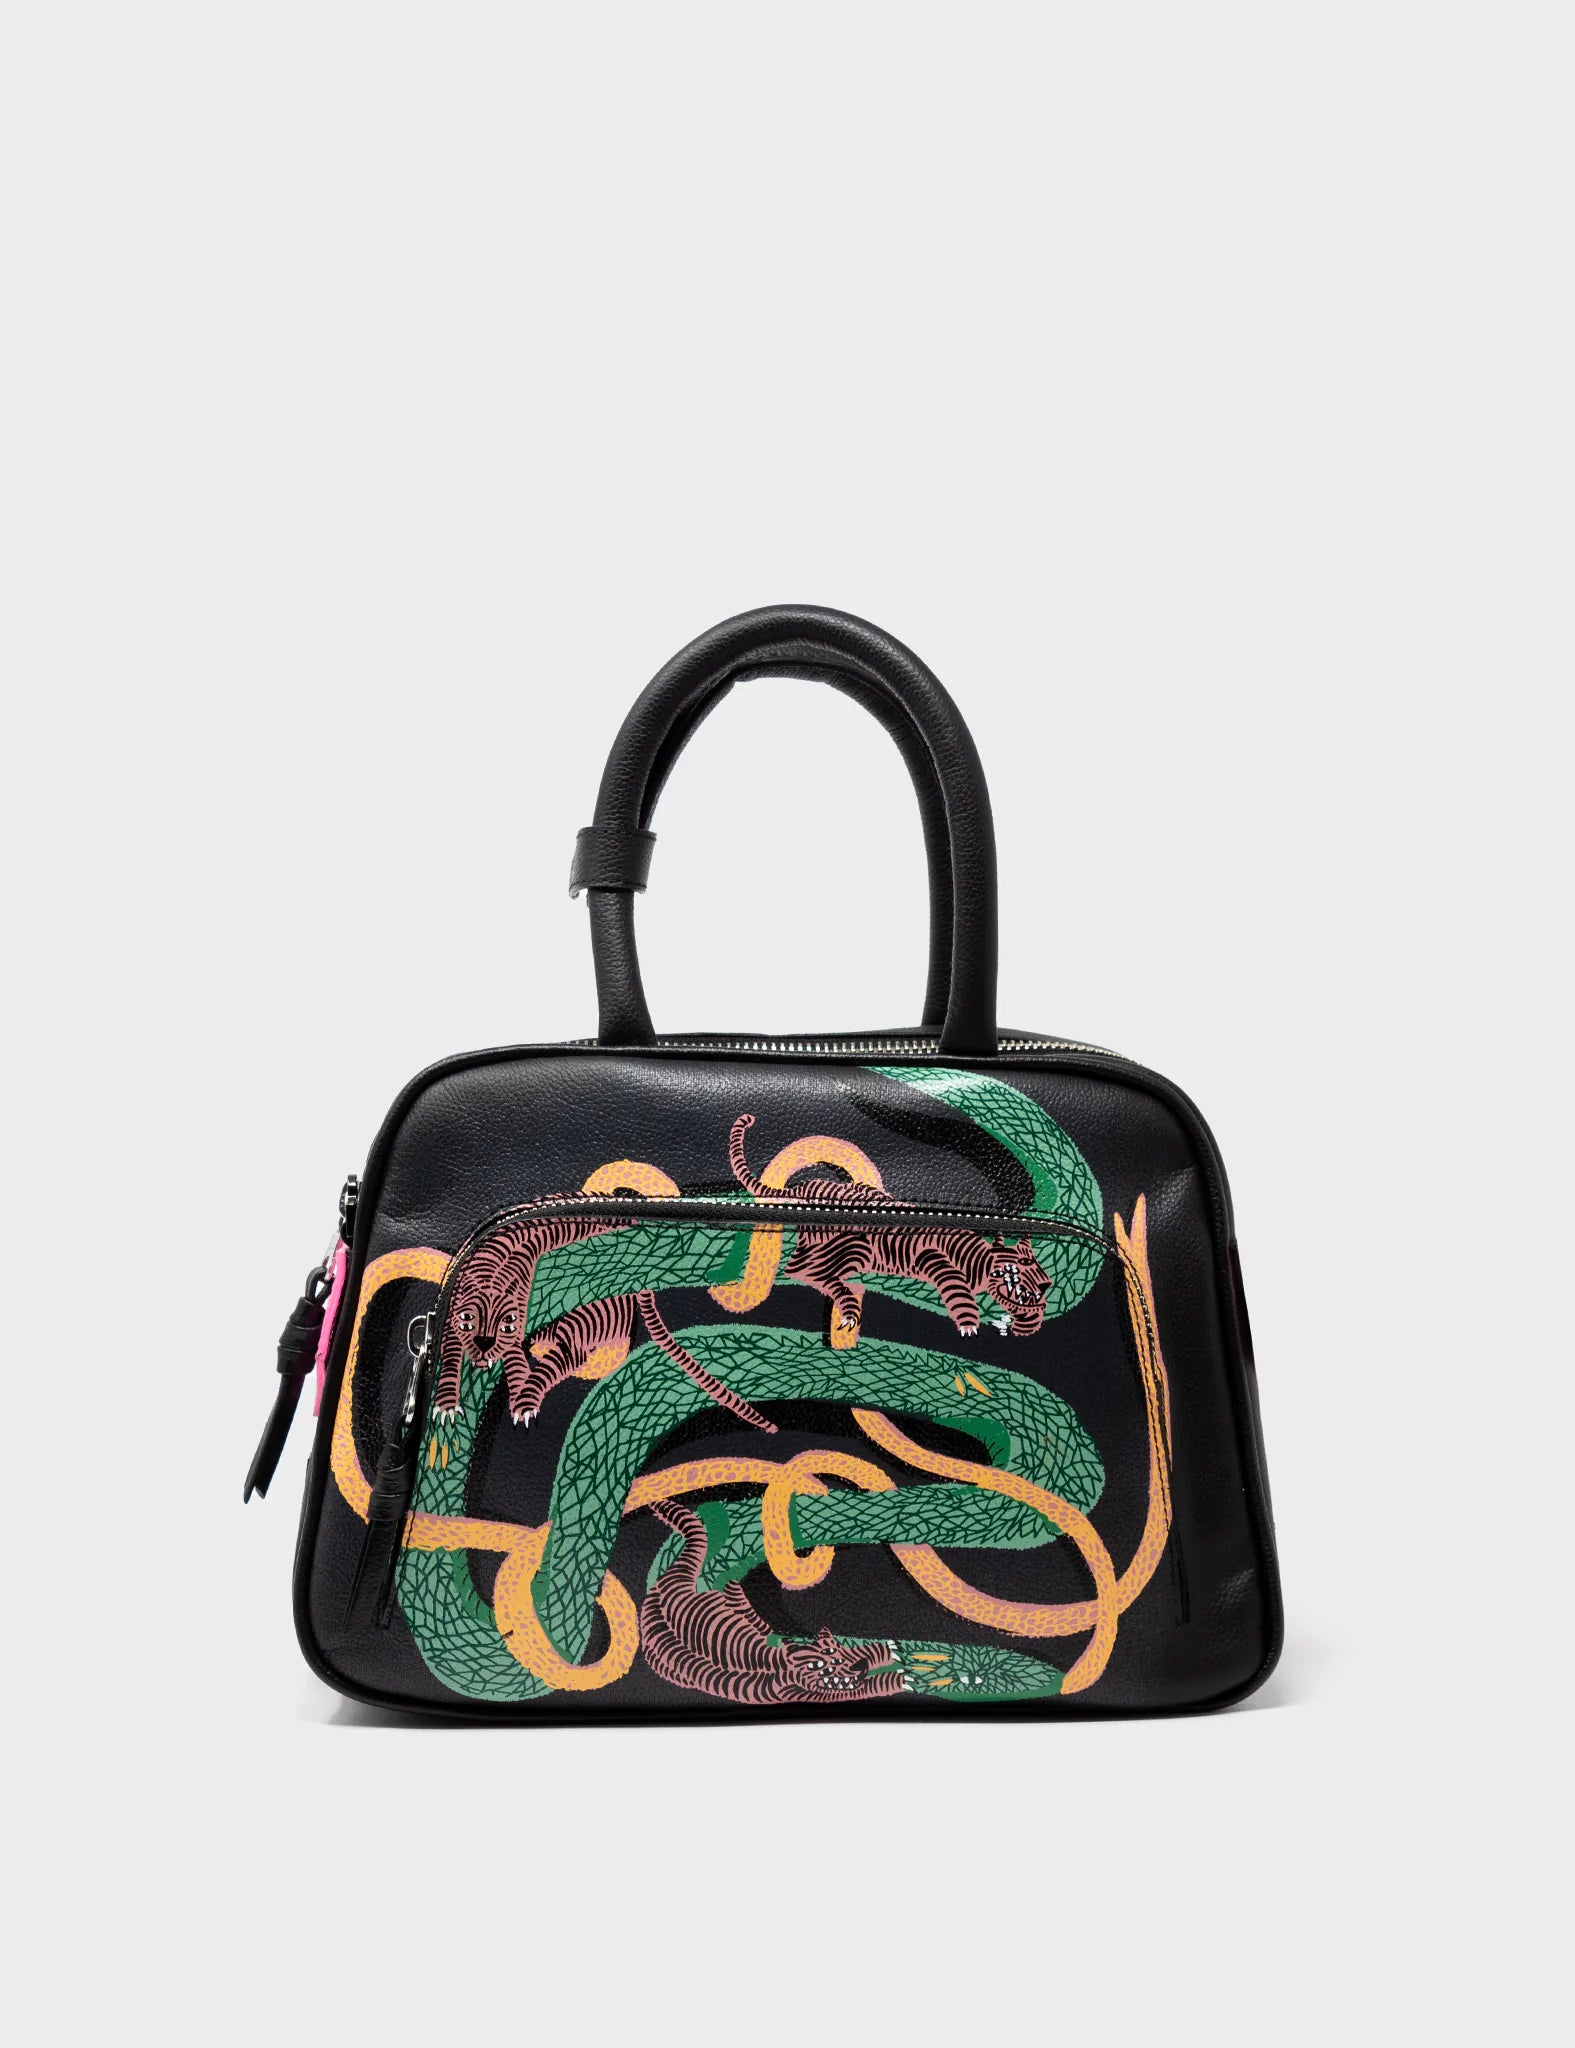 Marino Medium Crossbody Black Leather Bag - Tiger And Snake Print - Front view 